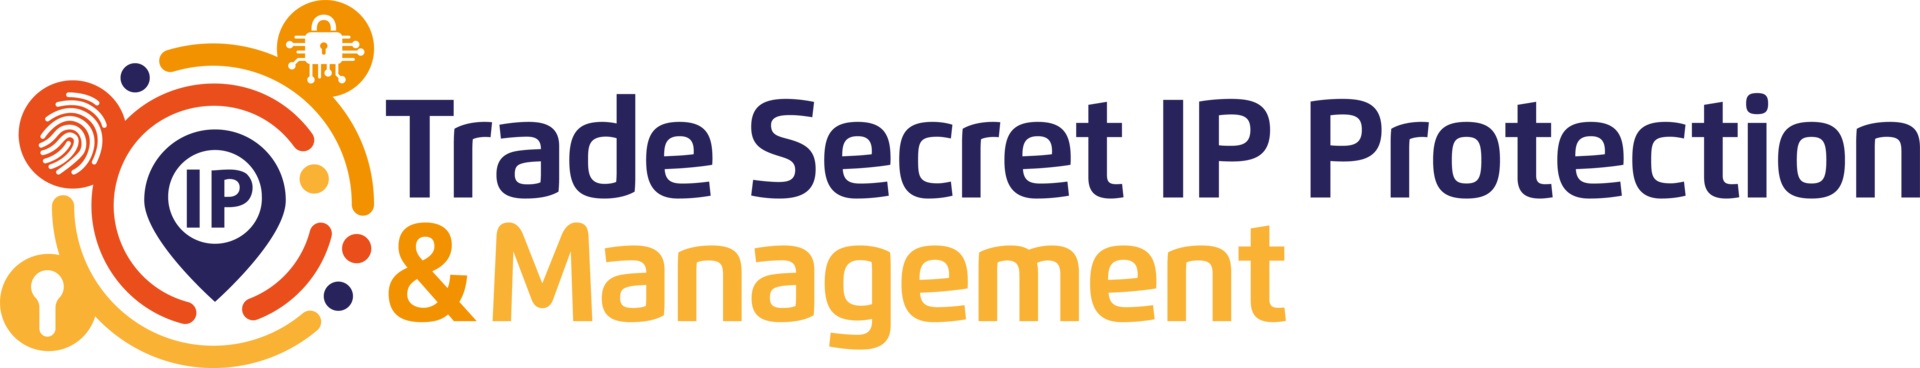 Trade Secret IP Protection and Management Europe, Bruxelles, Belgium